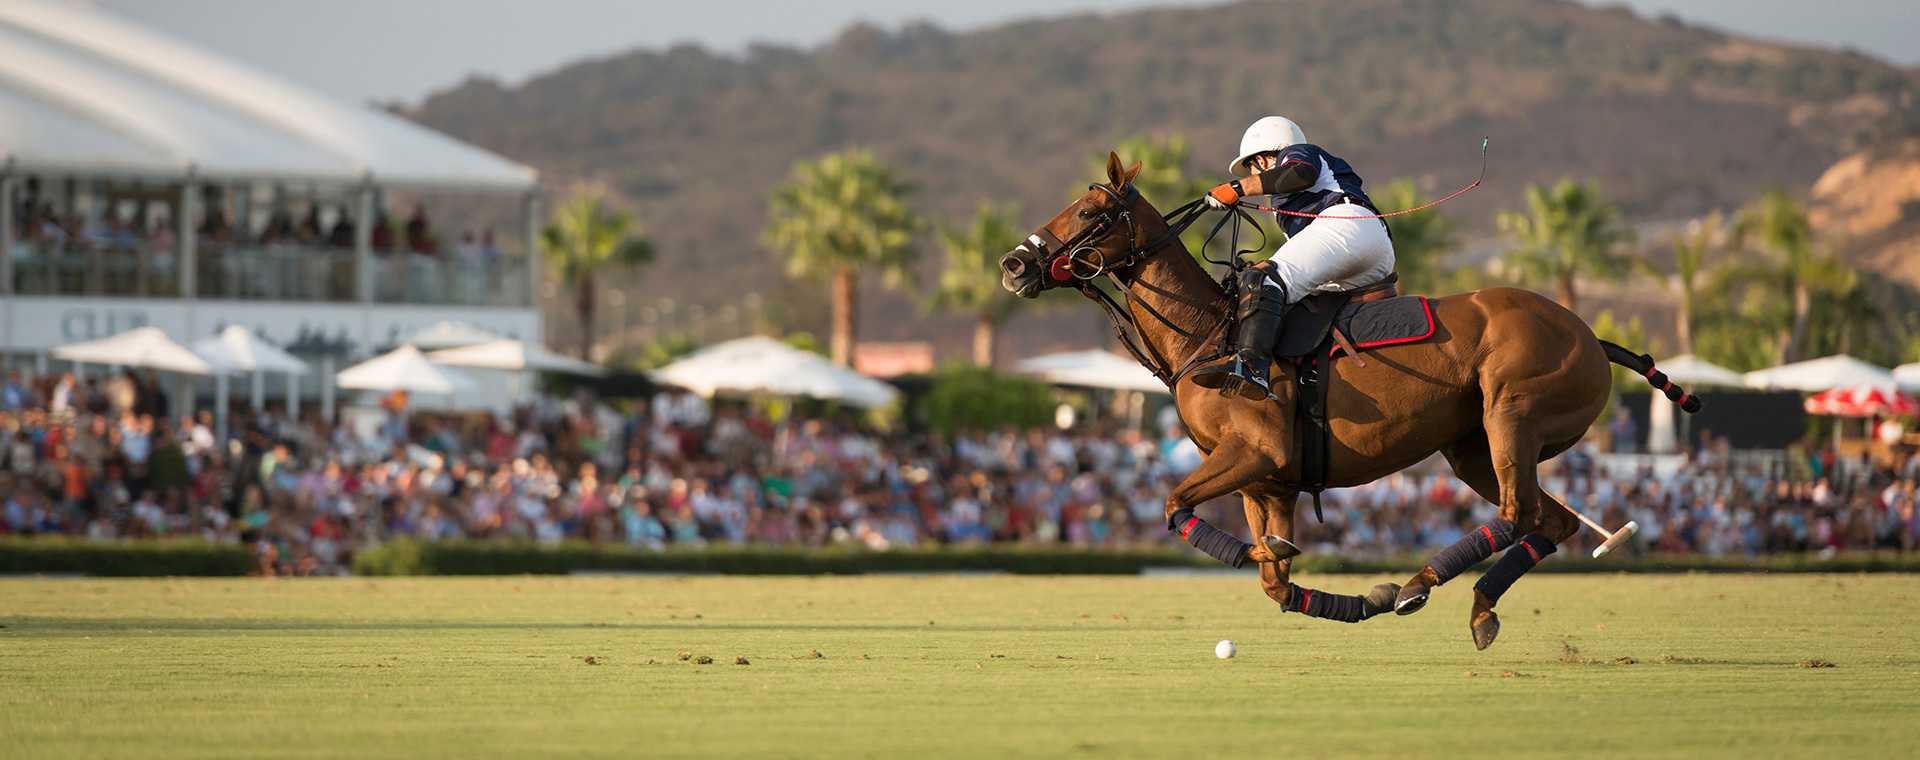 A jockey on horseback playing polo